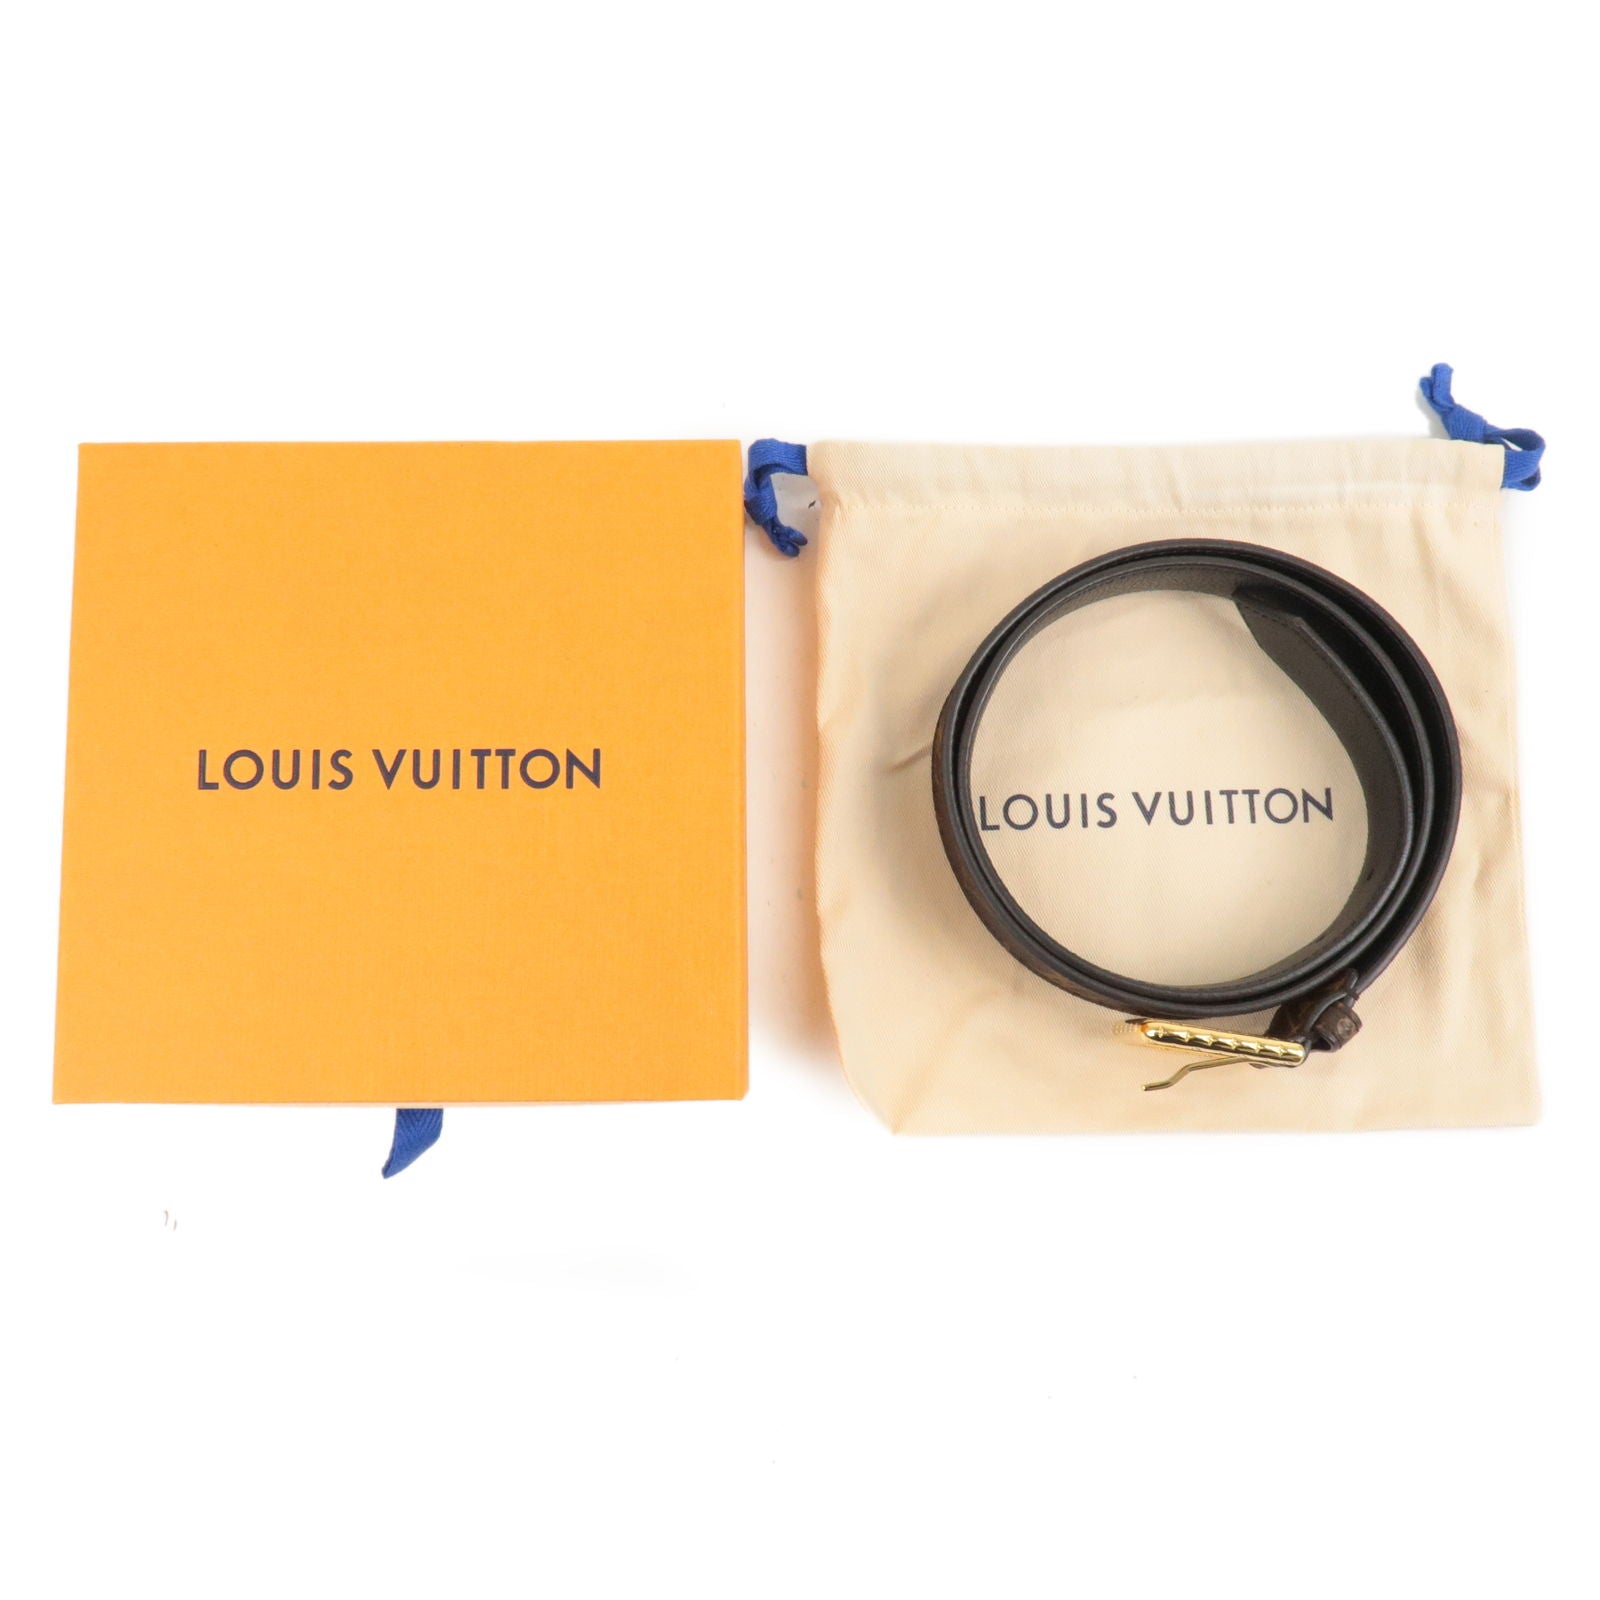 Louis Vuitton Damier Azur Checkered LV Men’s Belt White Size 85/34